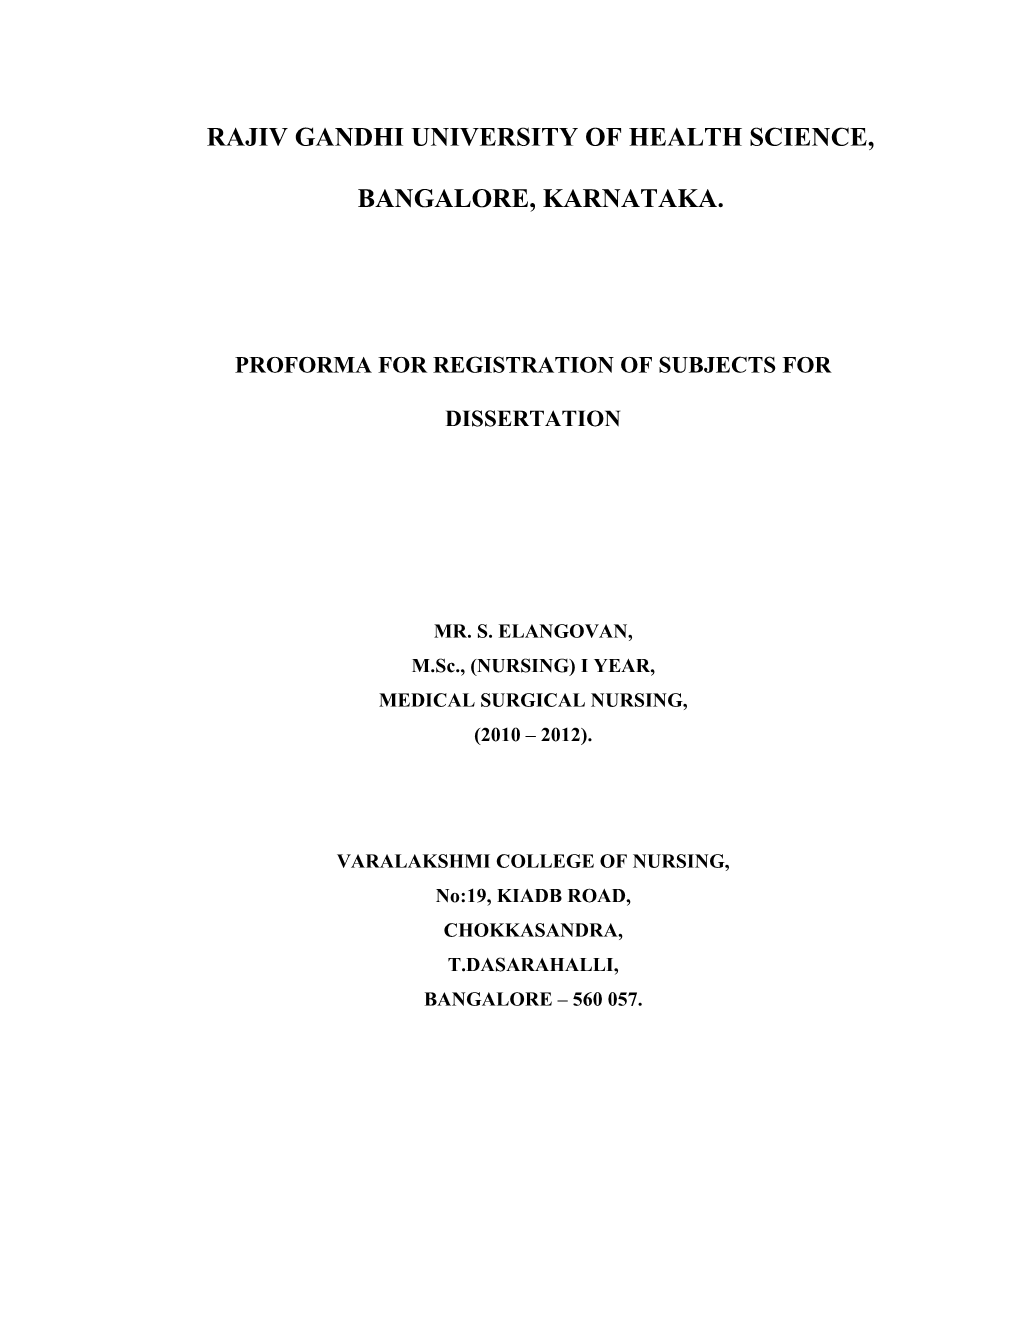 Rajivgandhiuniversity of Health Science, Bangalore, Karnataka